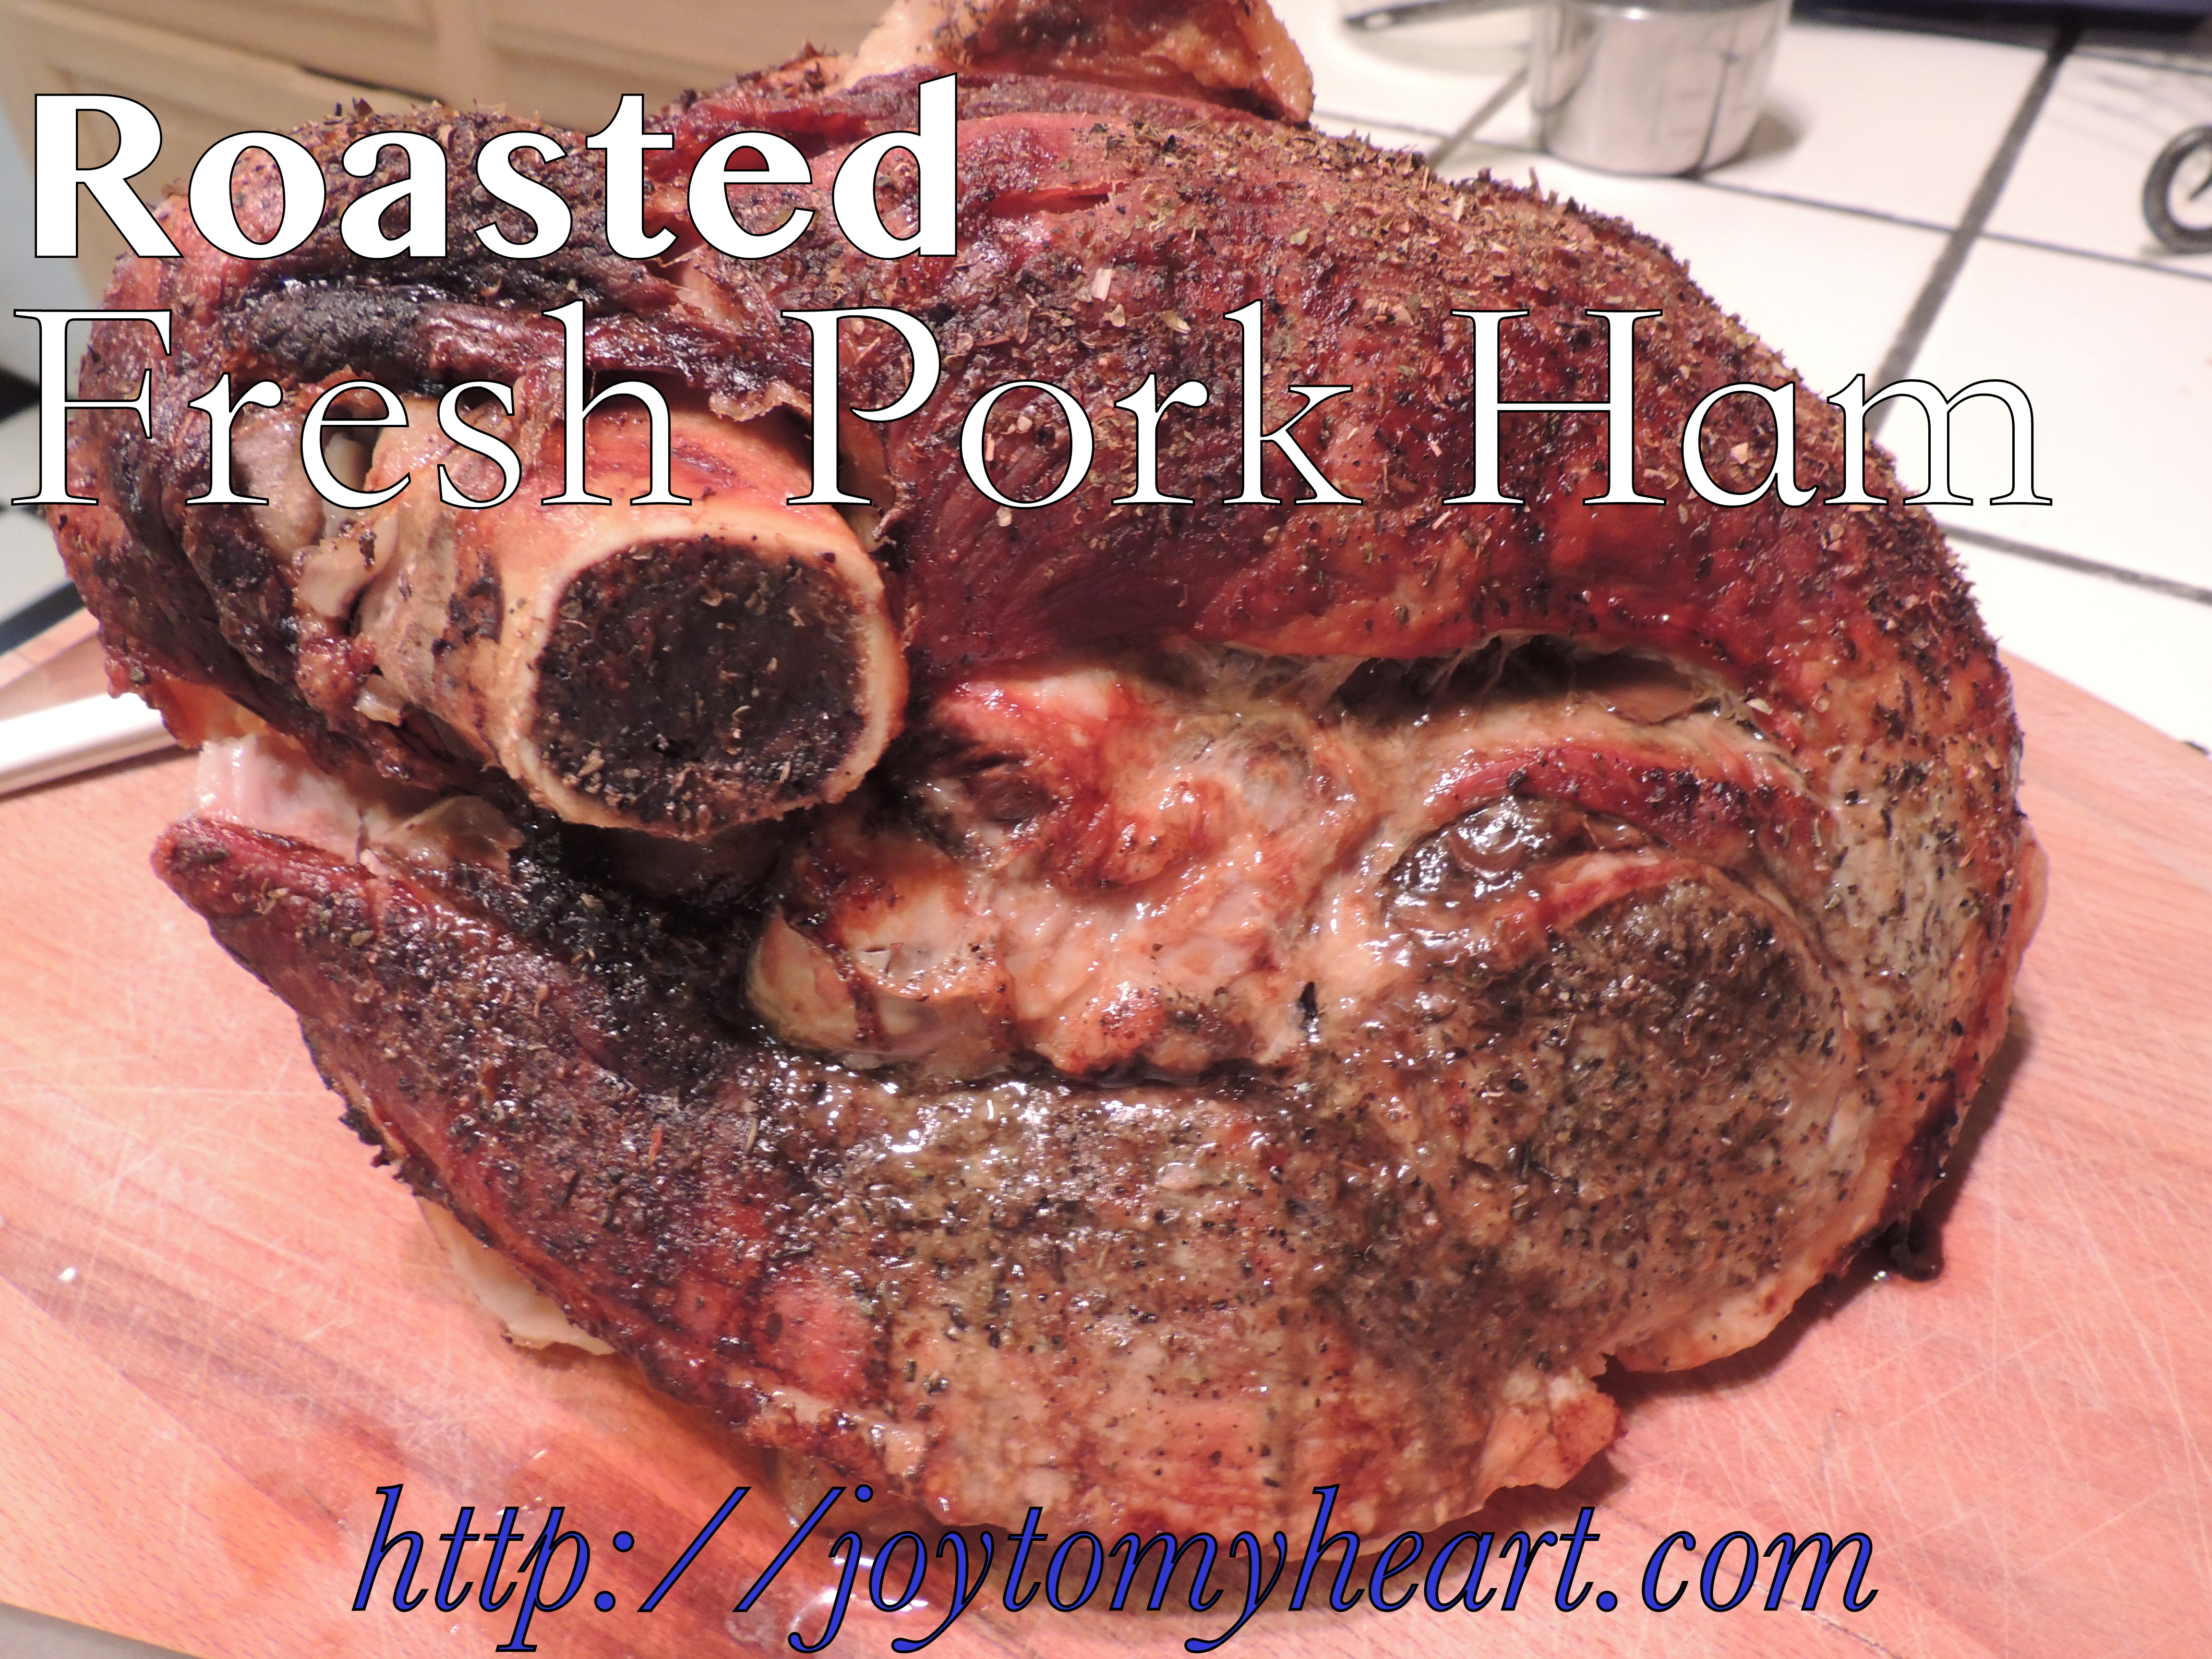 How does one roast a fresh ham?